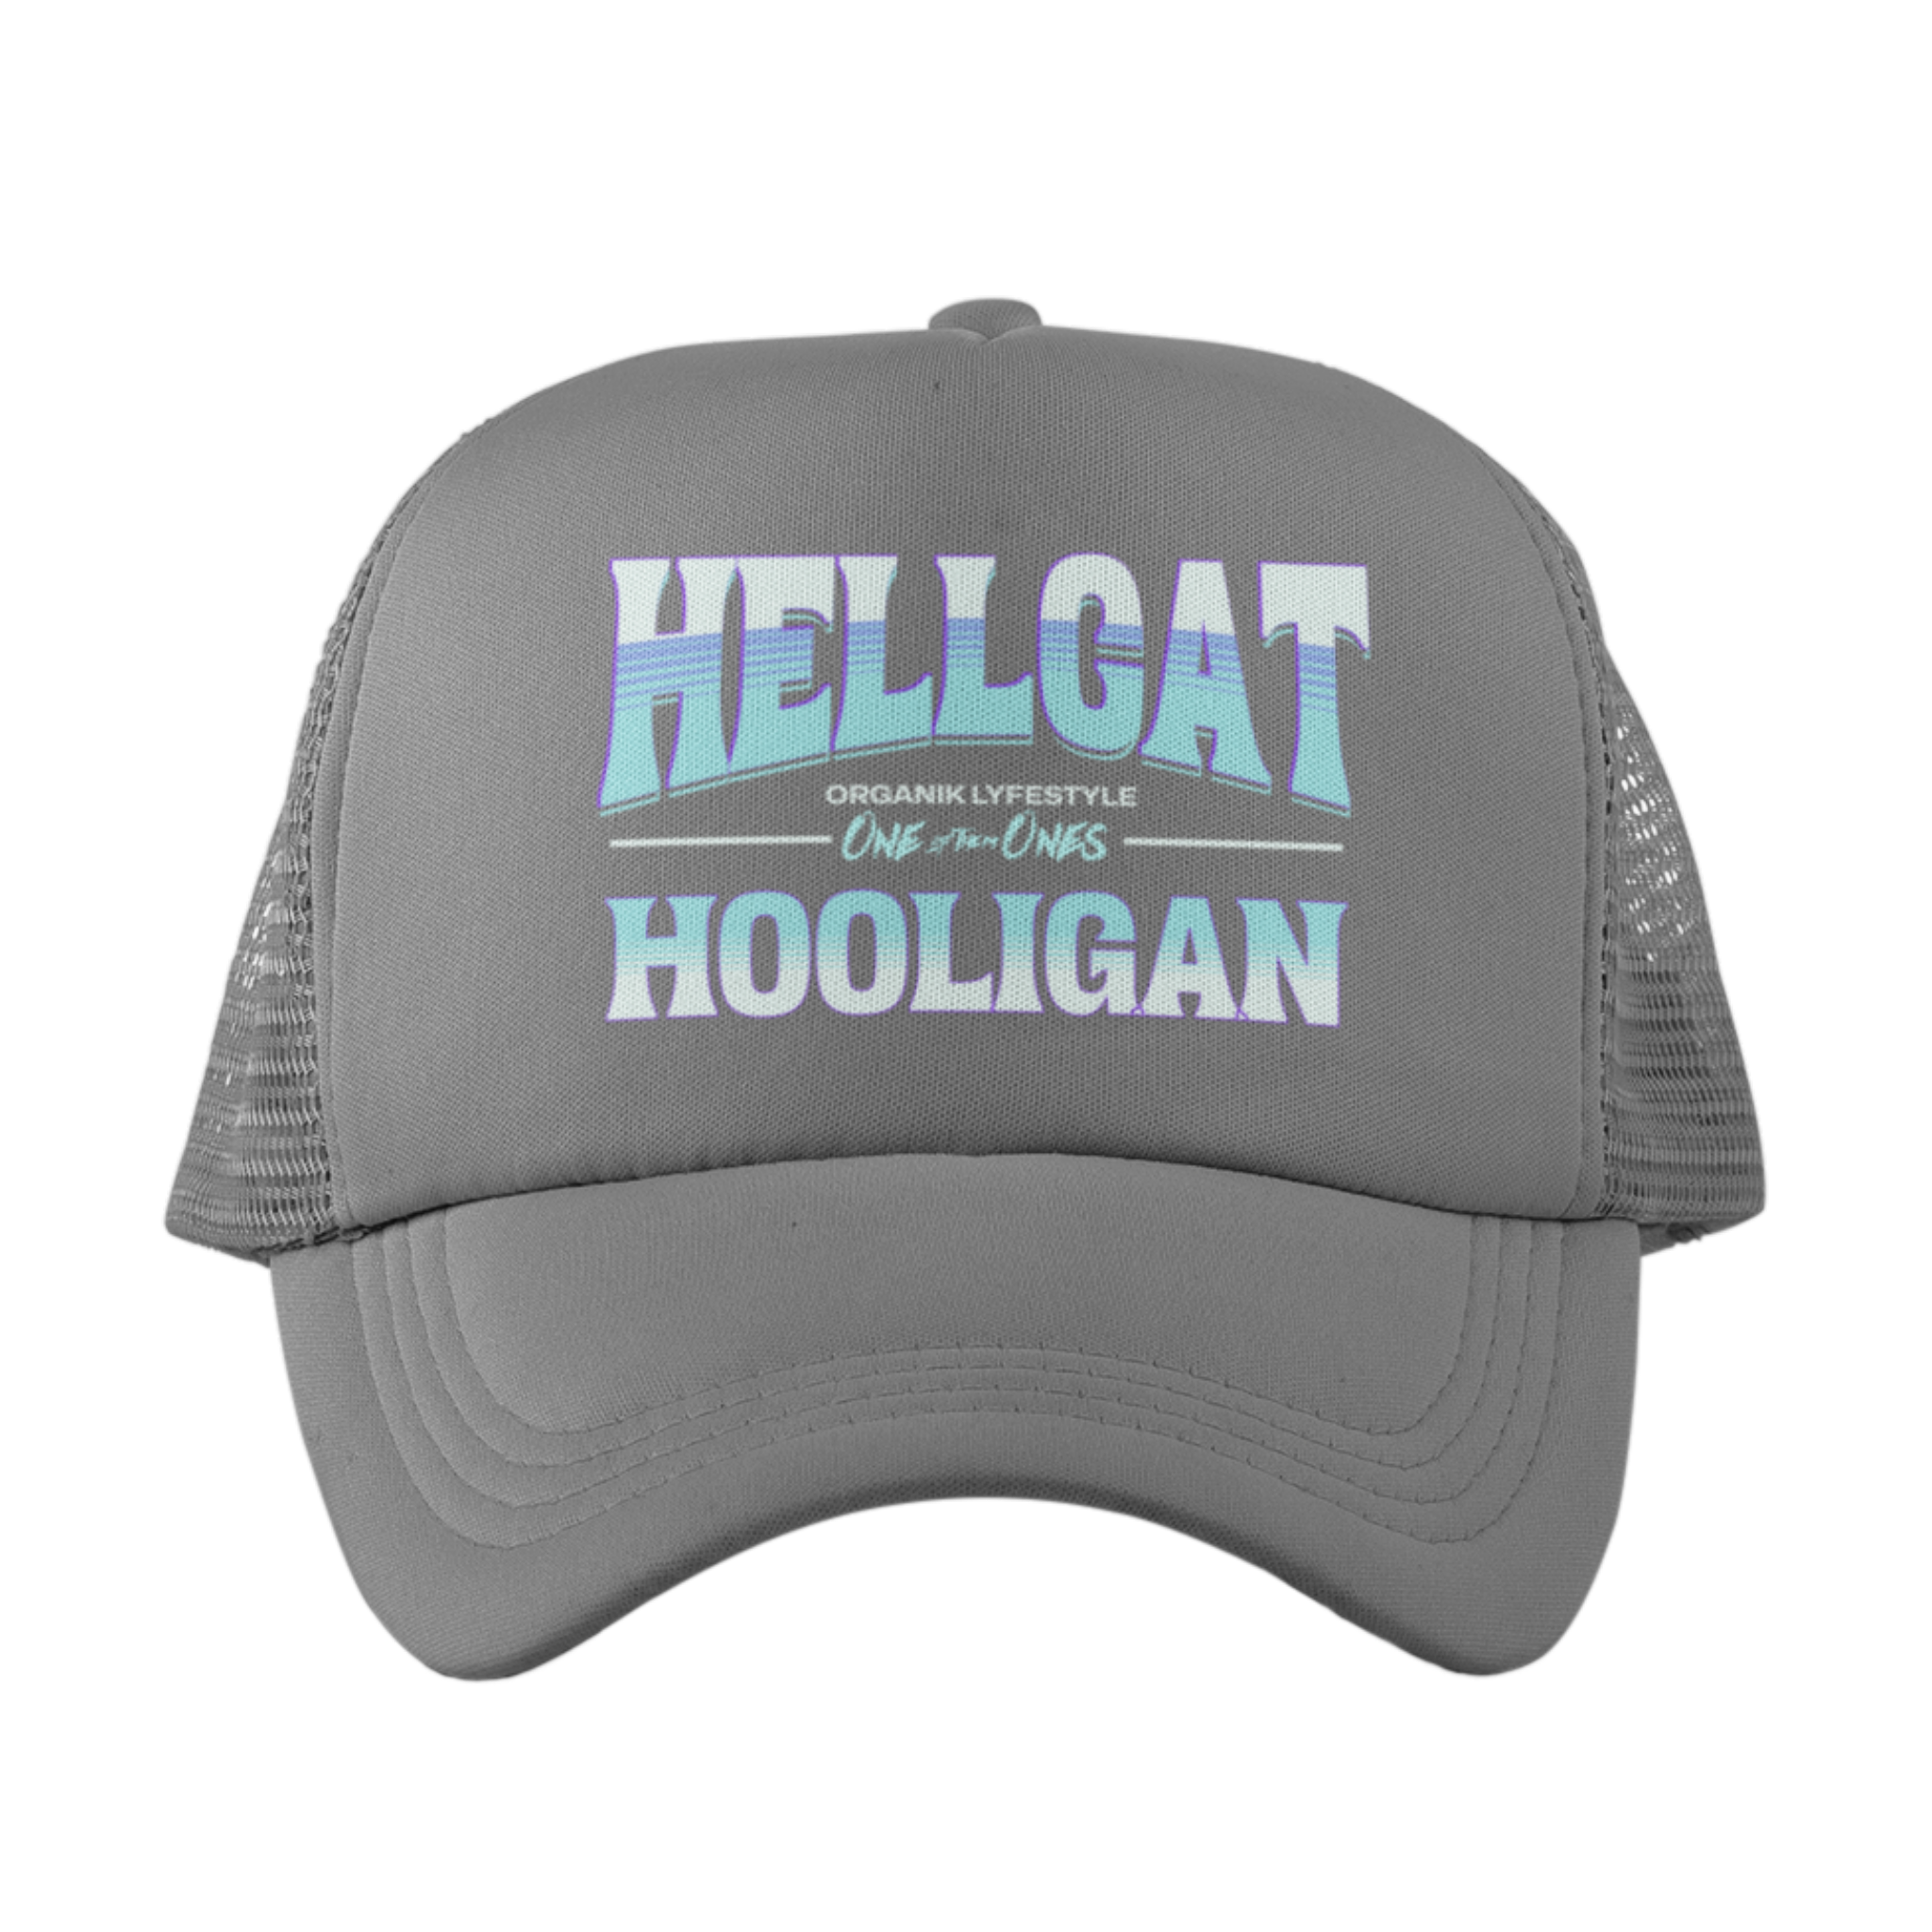 Organik Lyfestyle - Hellcat Hooligan Hat - Grey